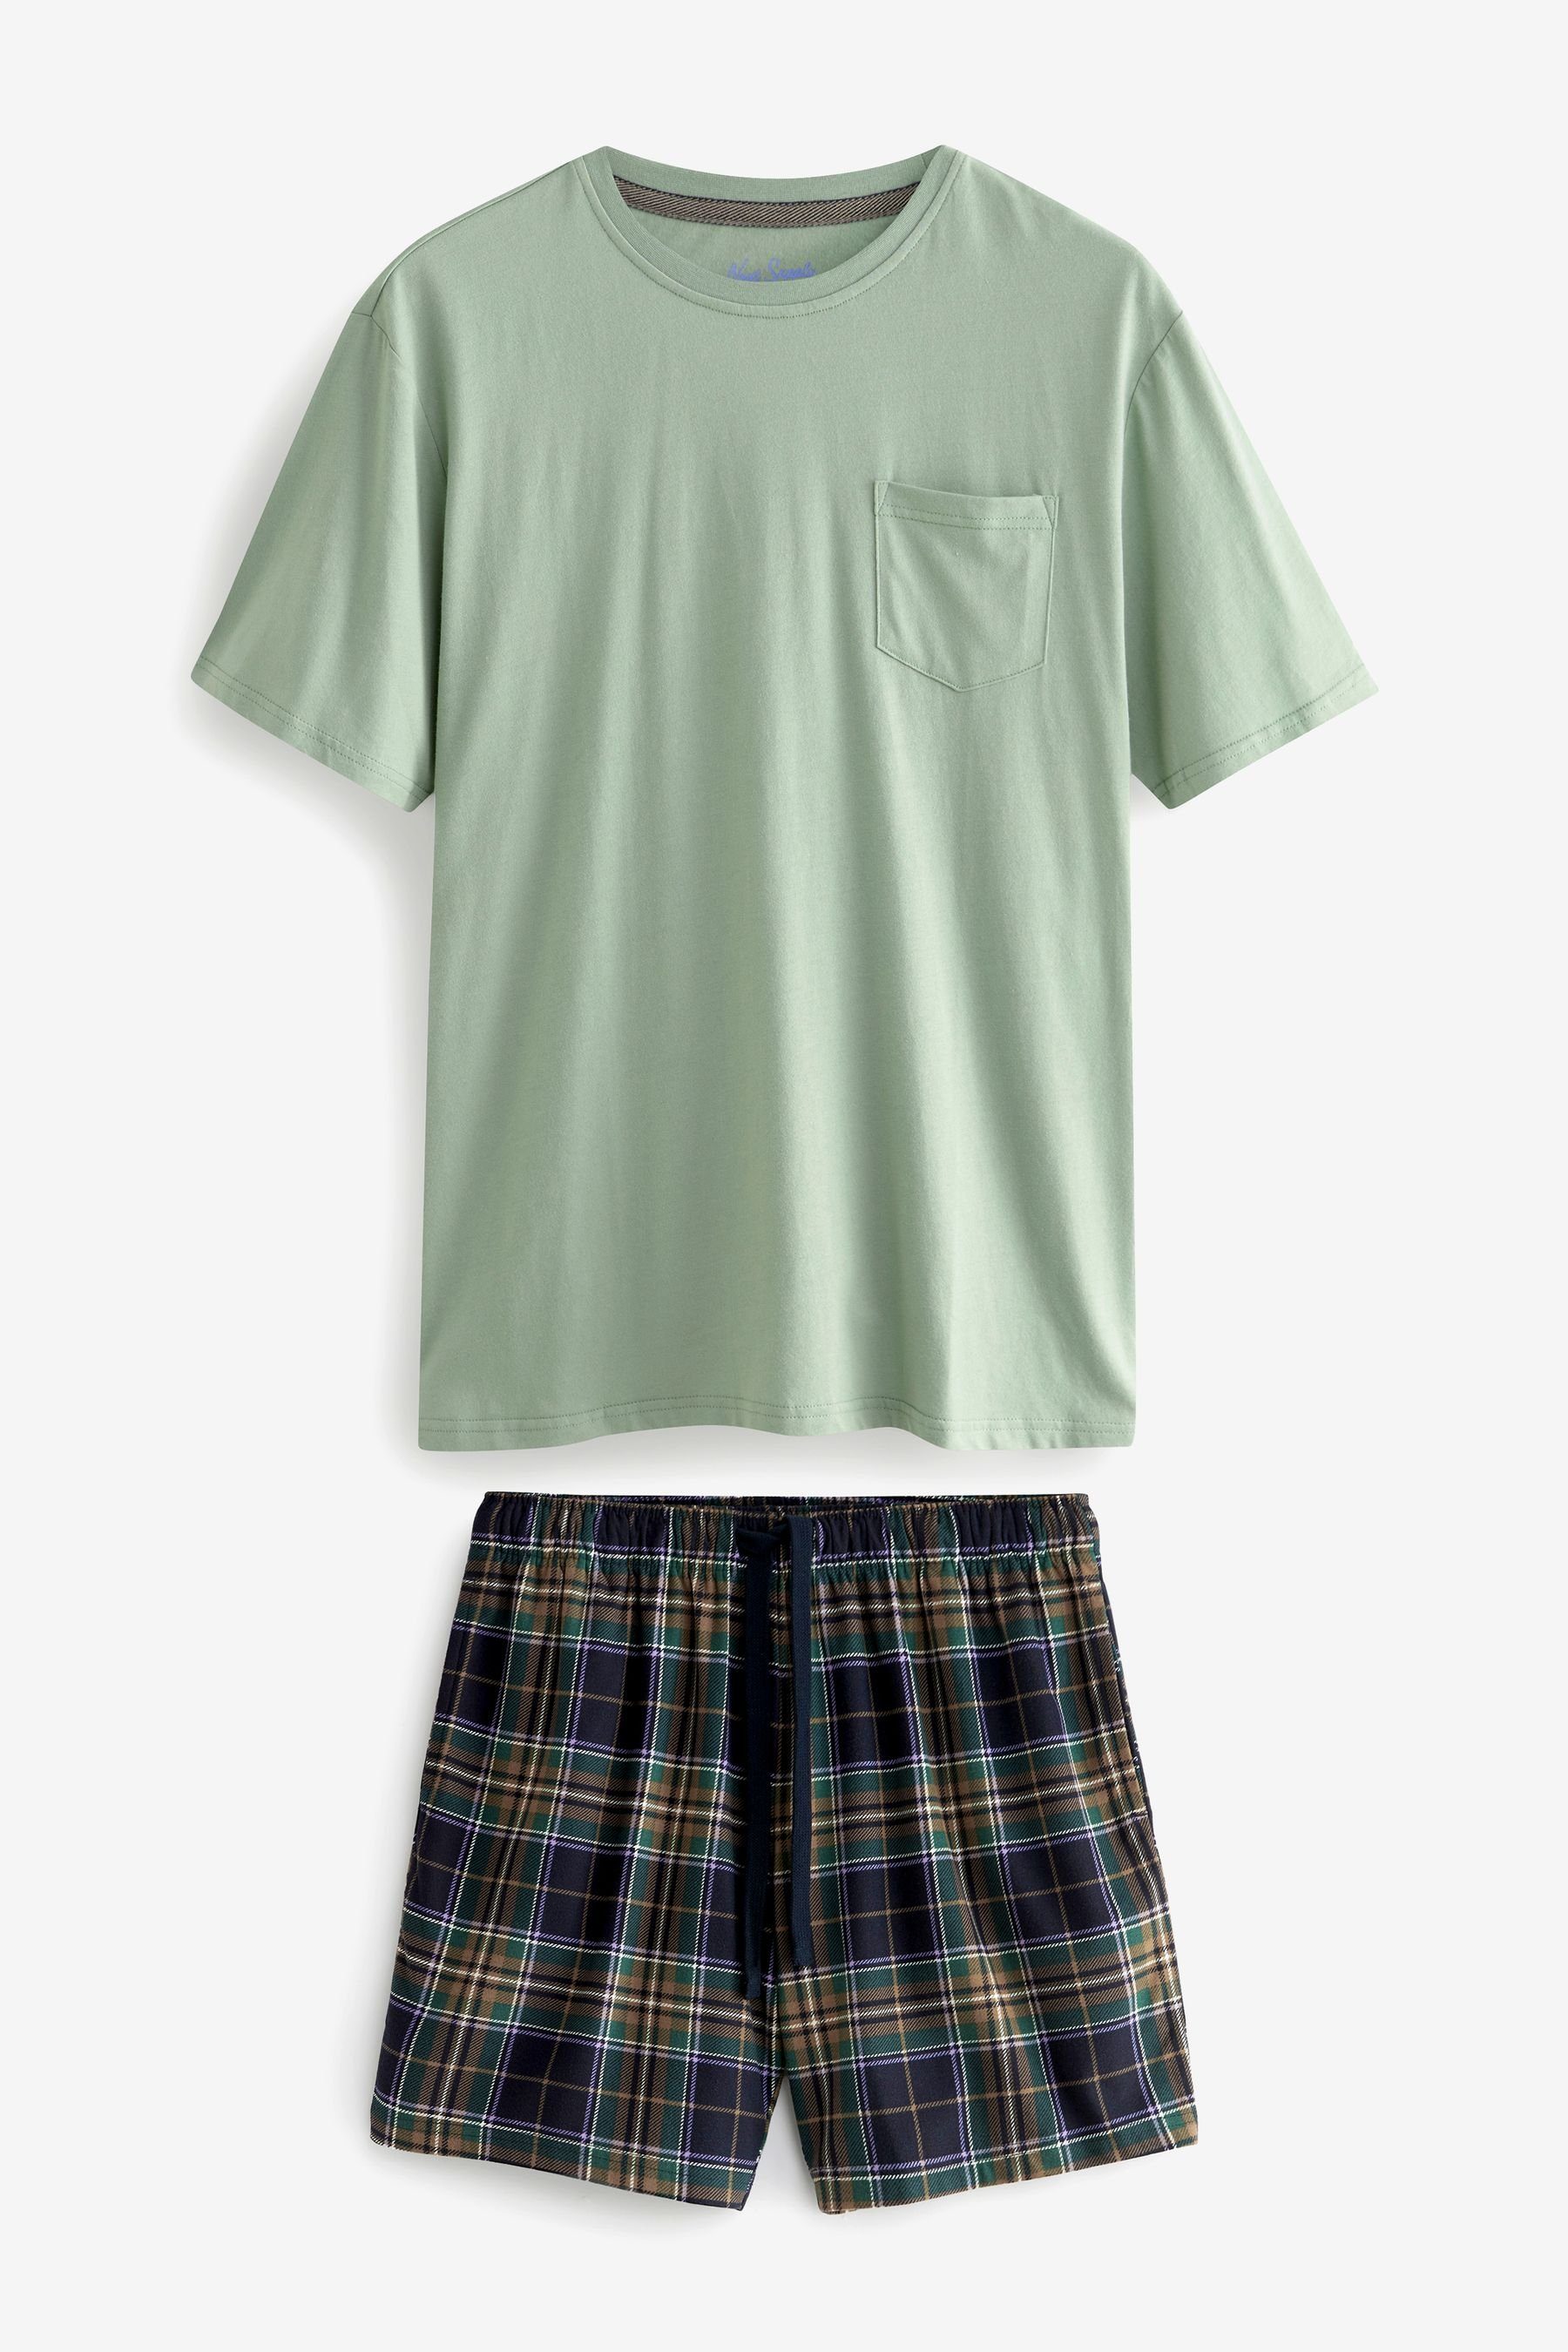 Next Pyjama Motion Flex Pale Blue (2 Green/Navy Check Shorts tlg) Pyjama Kuscheliger mit